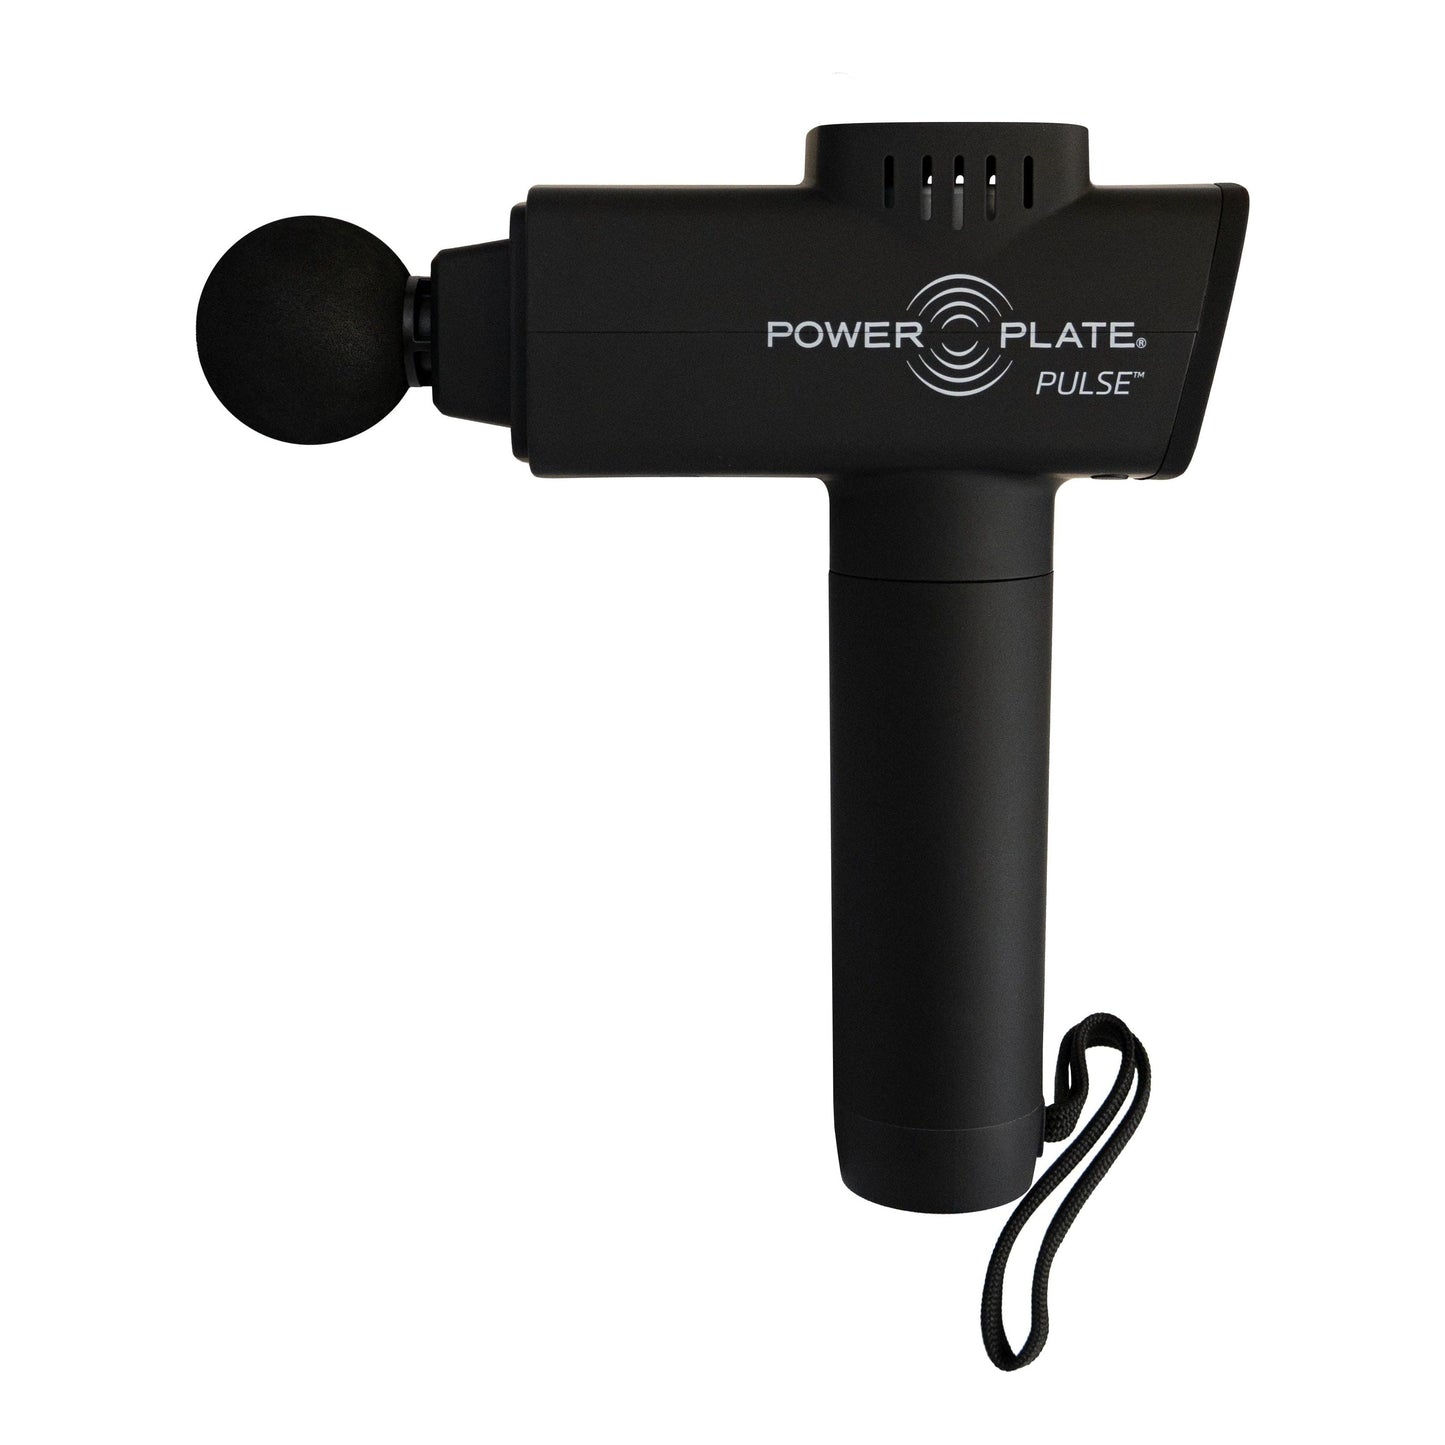 Power Plate Pulse Massage Gun (Black) Additional Options-Personal